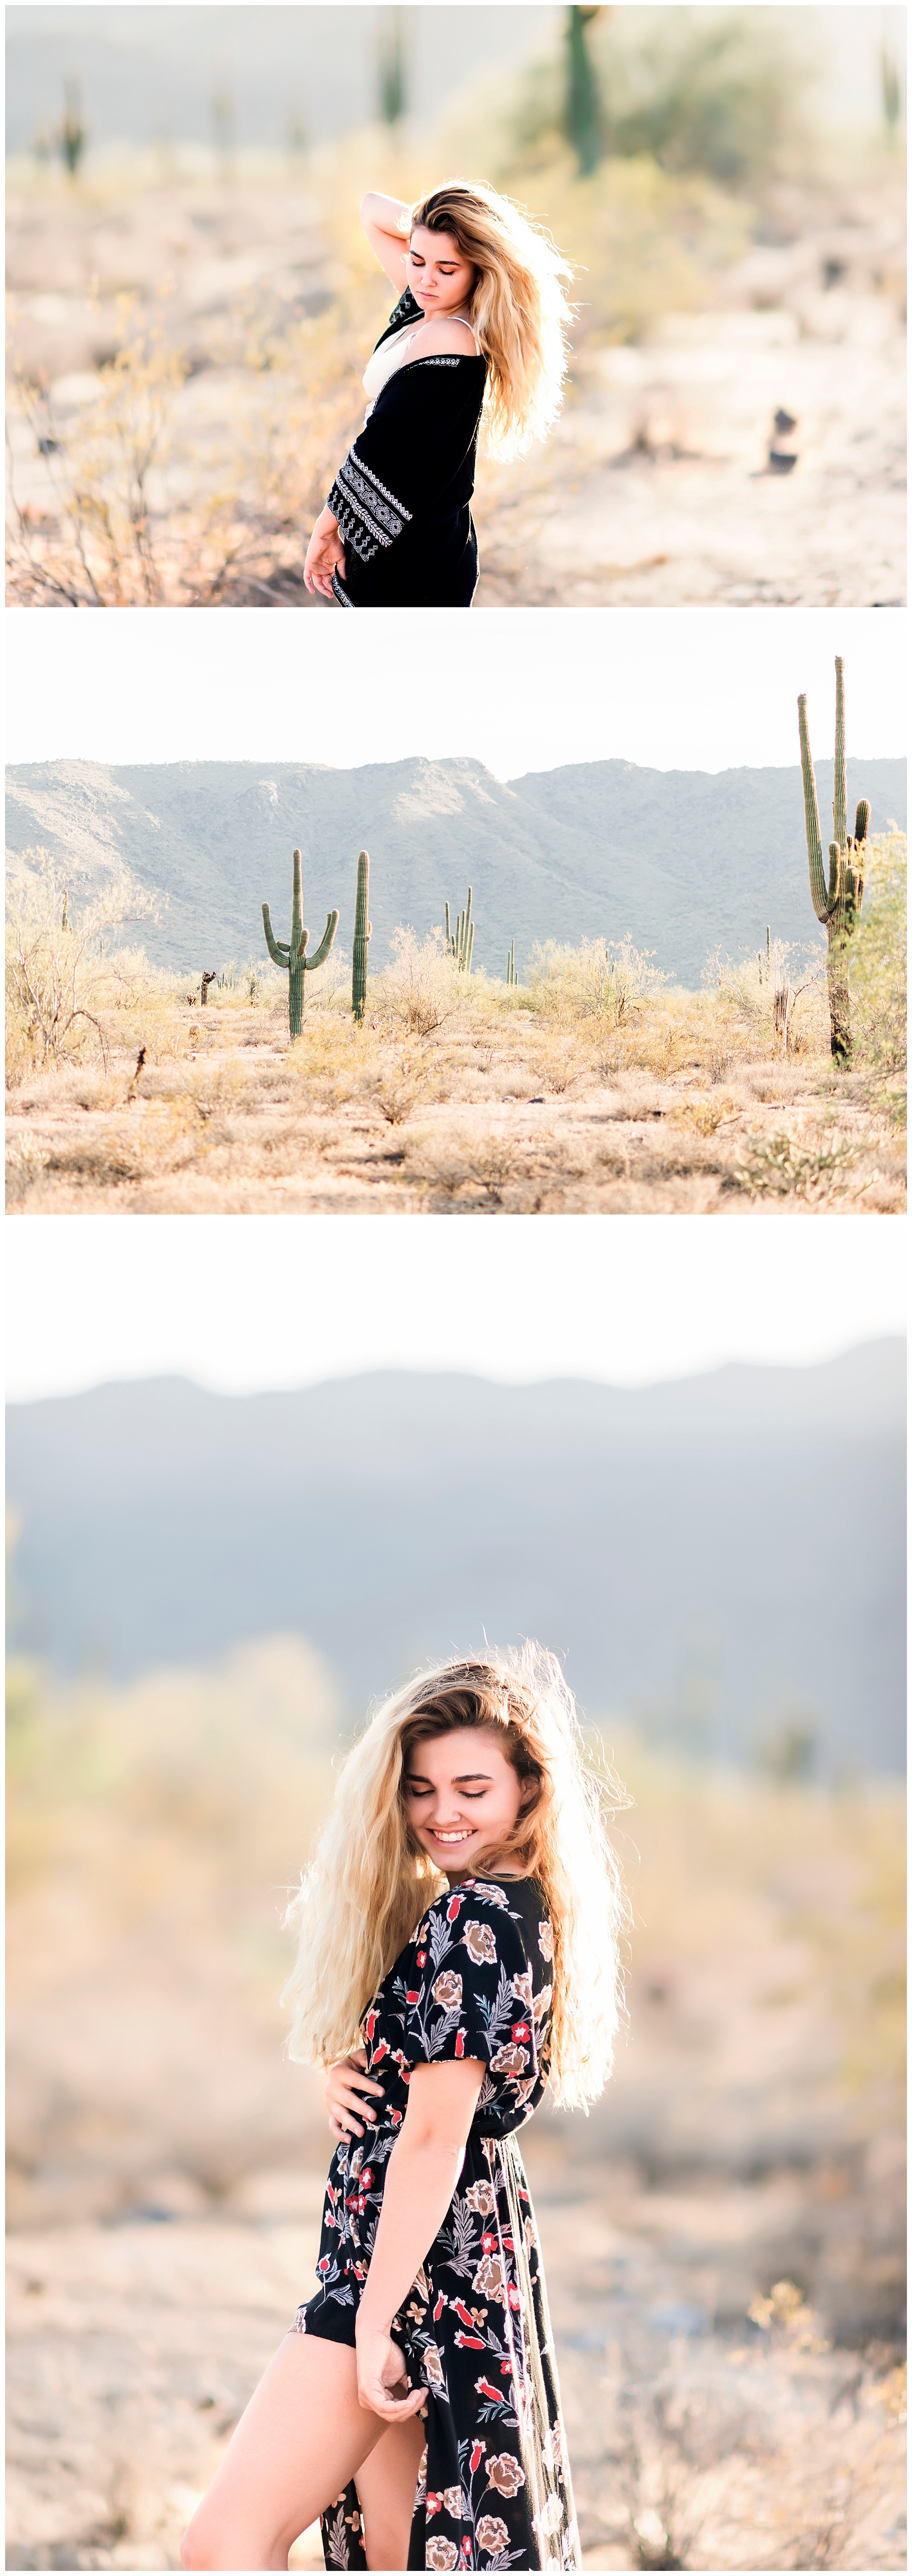 Kaitlyn's-Senior-Photos-White-Tank-Mountains-Arizona-Ashley-Flug-Photography07-1.jpg